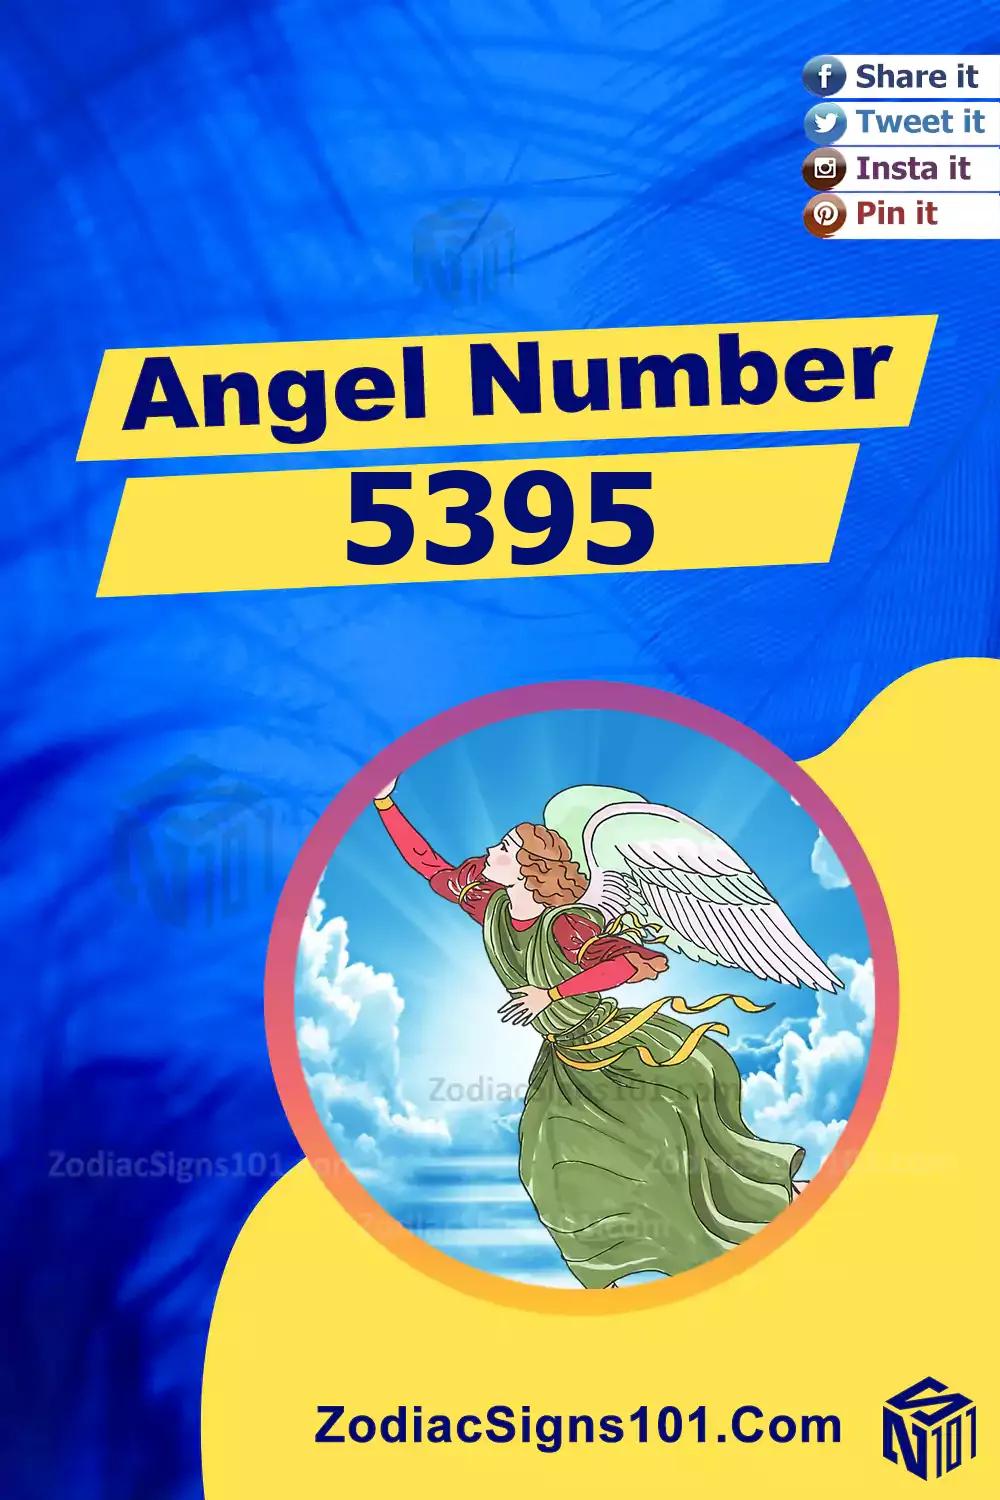 5395-Angel-Number-Meaning.jpg